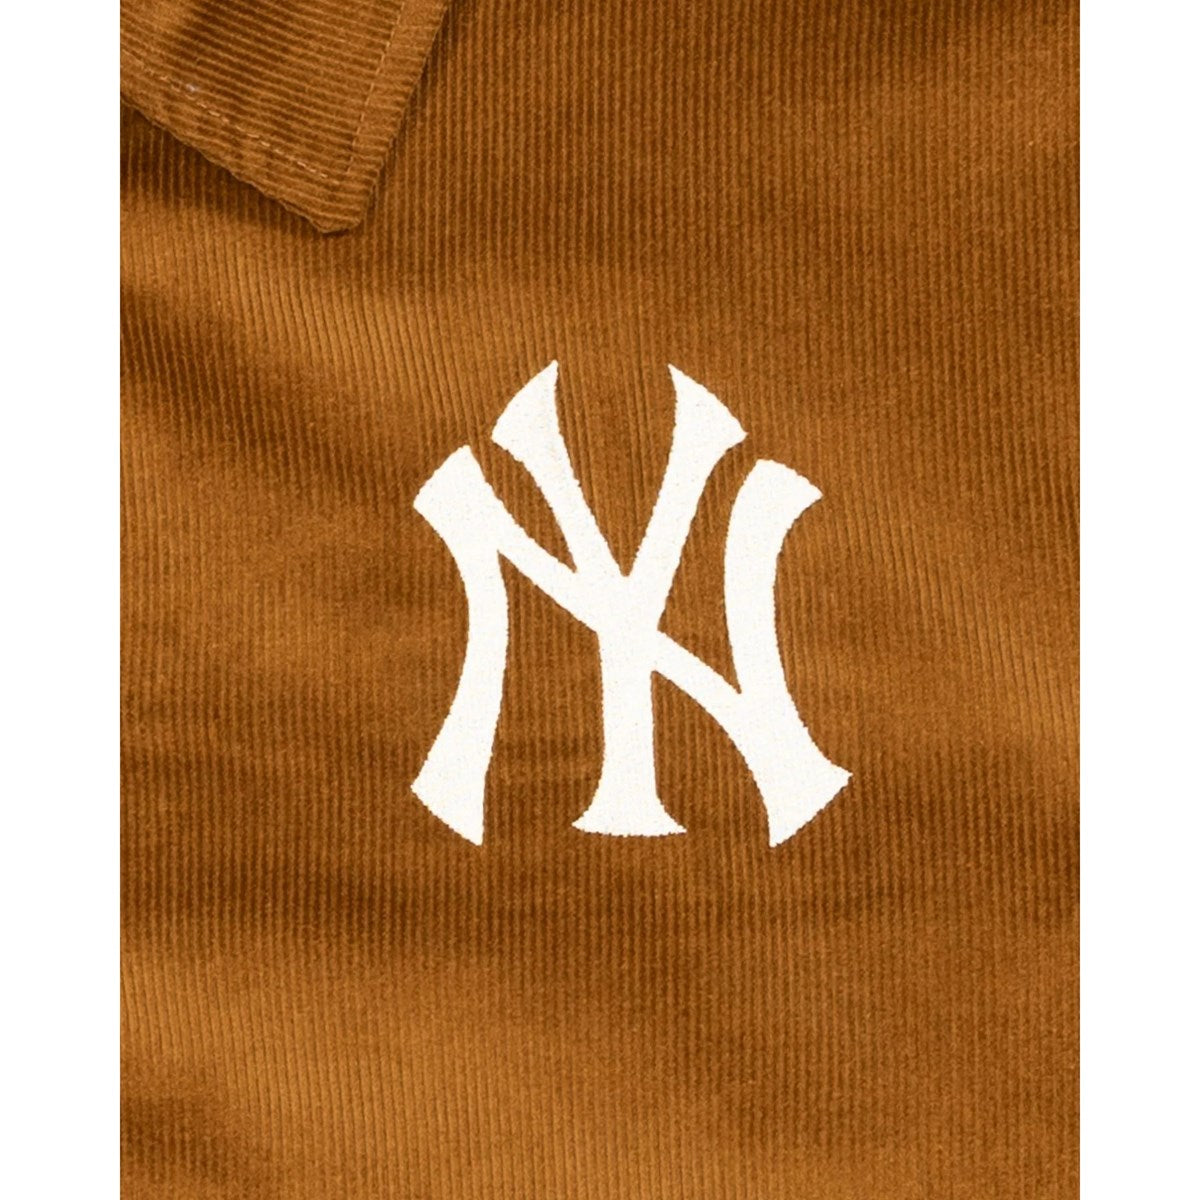 NEW ERA 紐約洋基隊 - 繩紋夾克